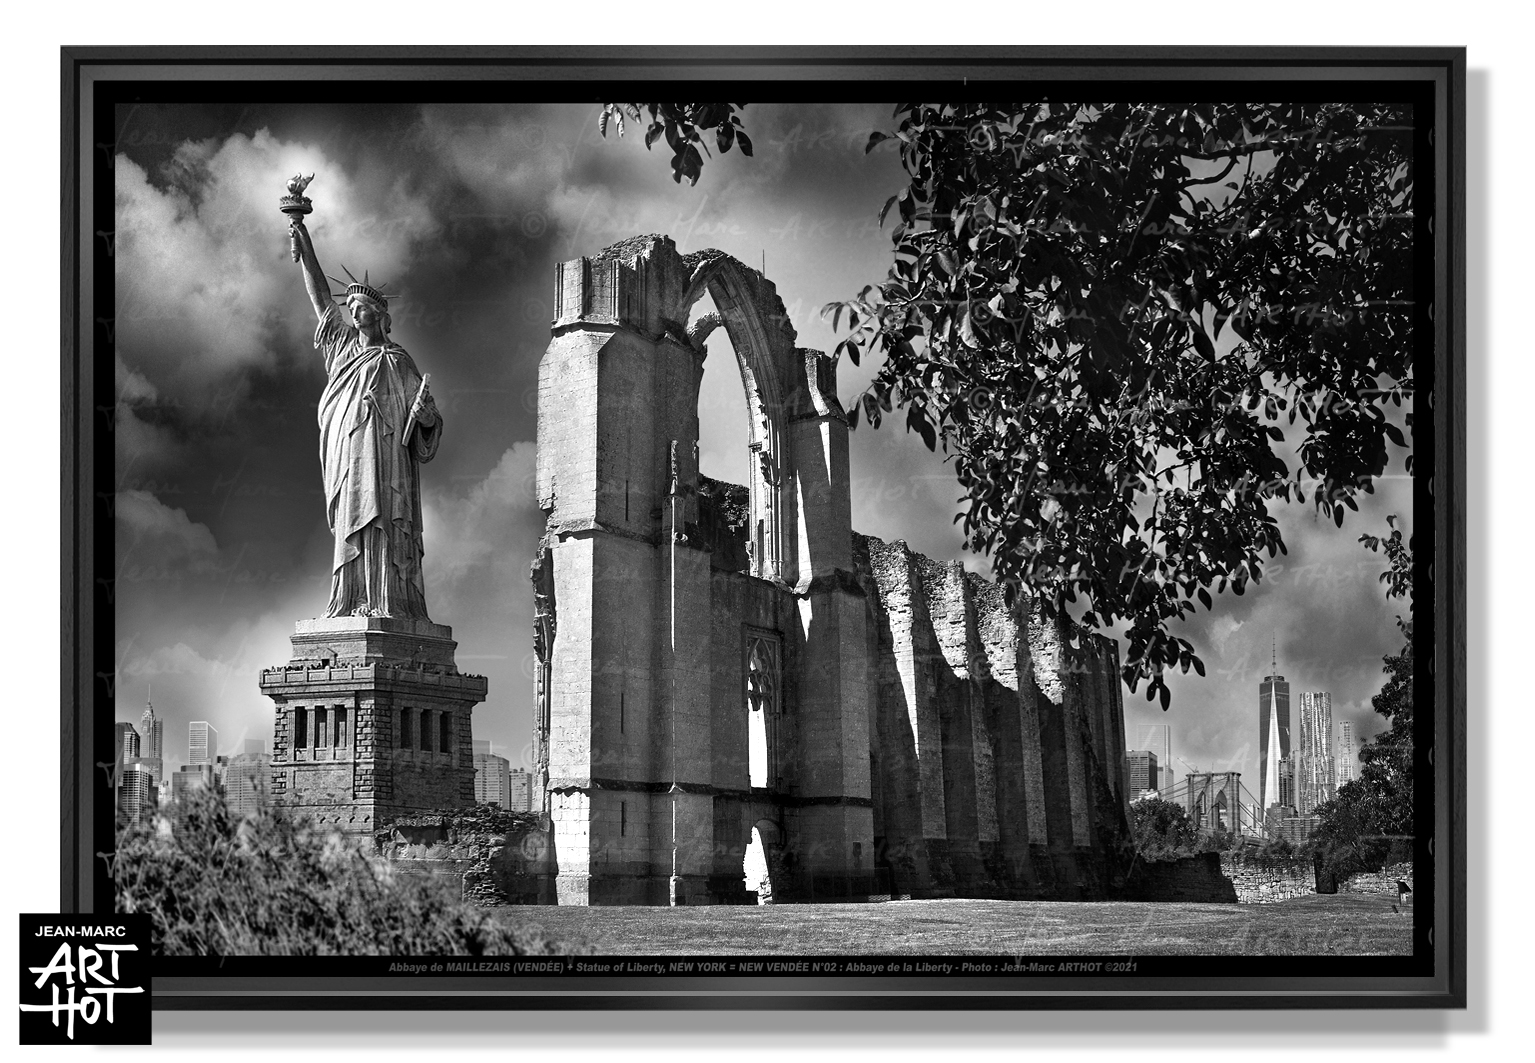 arthot-photo-art-b&w-new-york-vendee-newvendee-002-abbaye-maillezais-statue-liberty-HORIZ